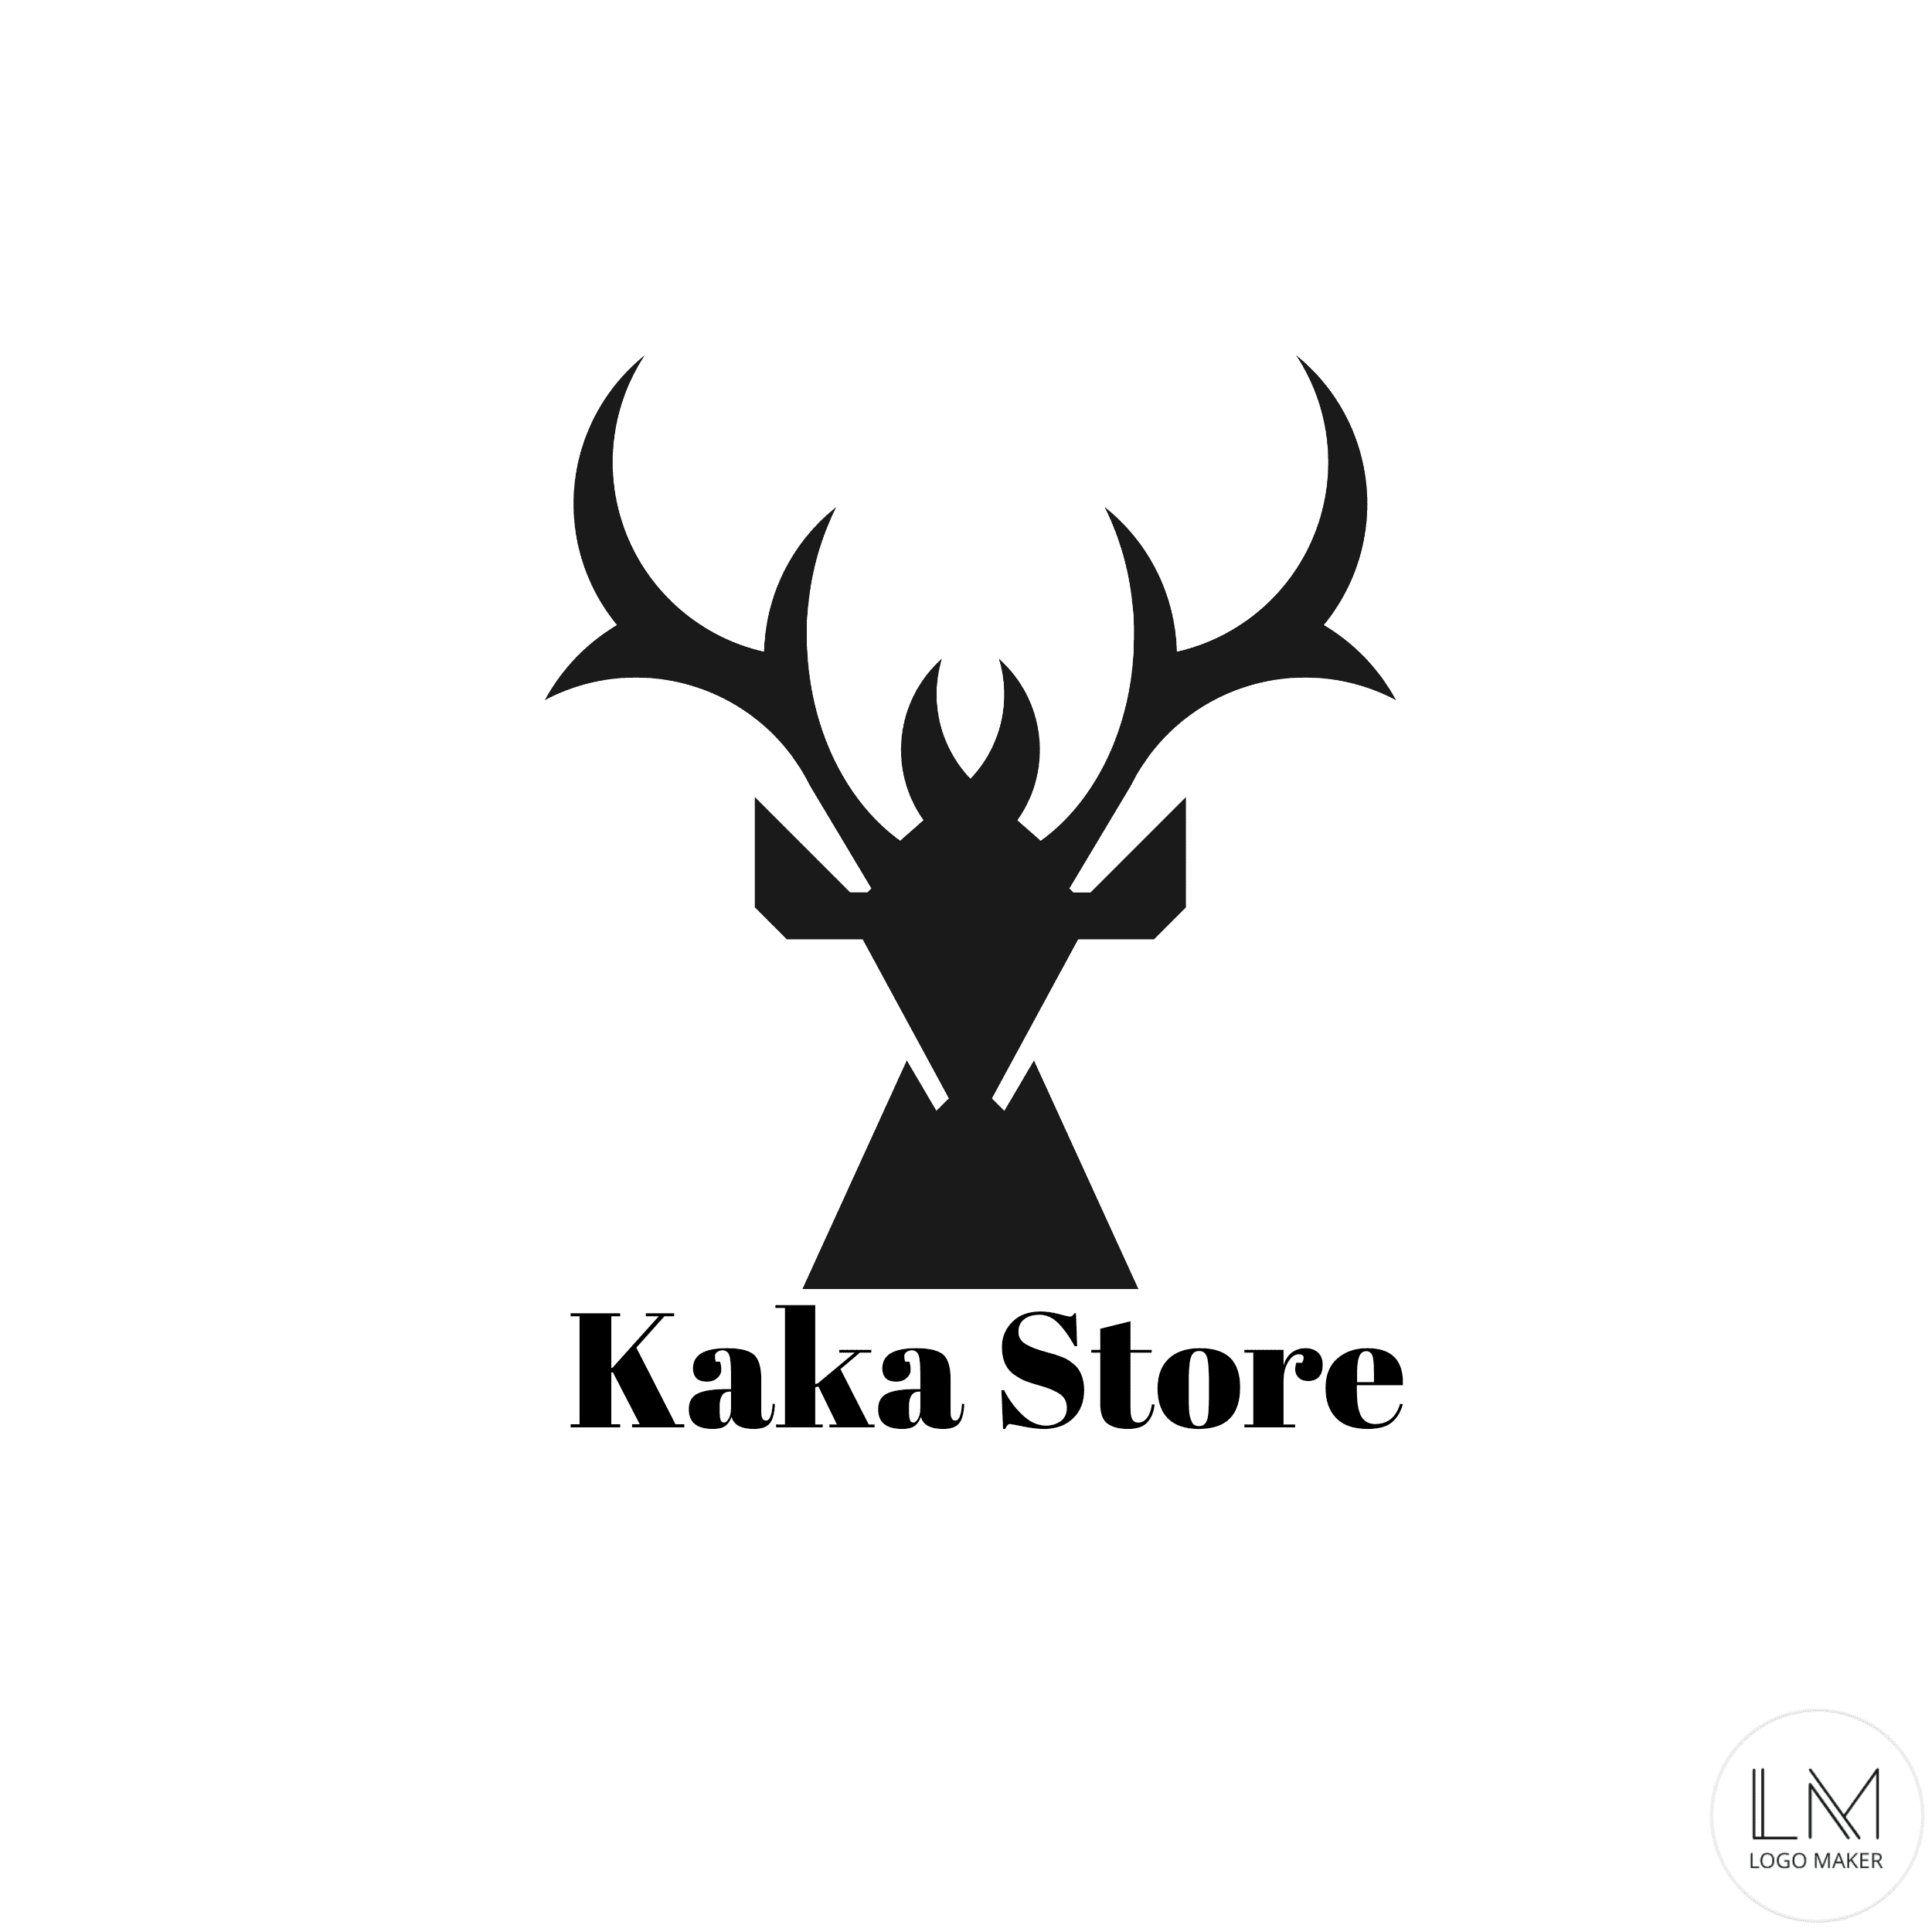 Kaka Store